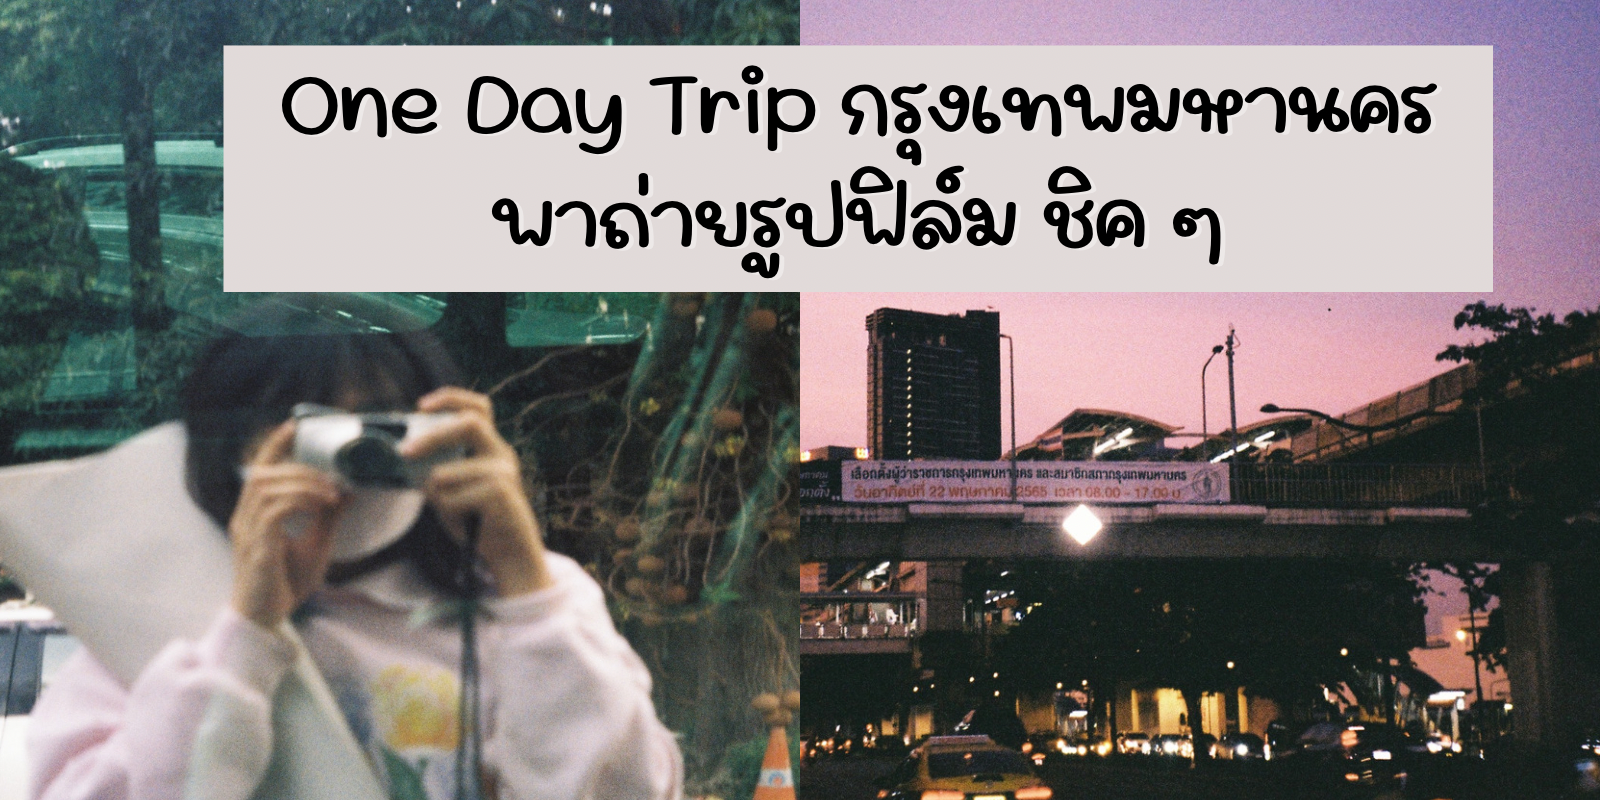 One day trip กรุงเทพมหานคร พาถ่ายรูปฟิล์ม ชิค ๆ #ท่องเที่ยว | TrueID Creator